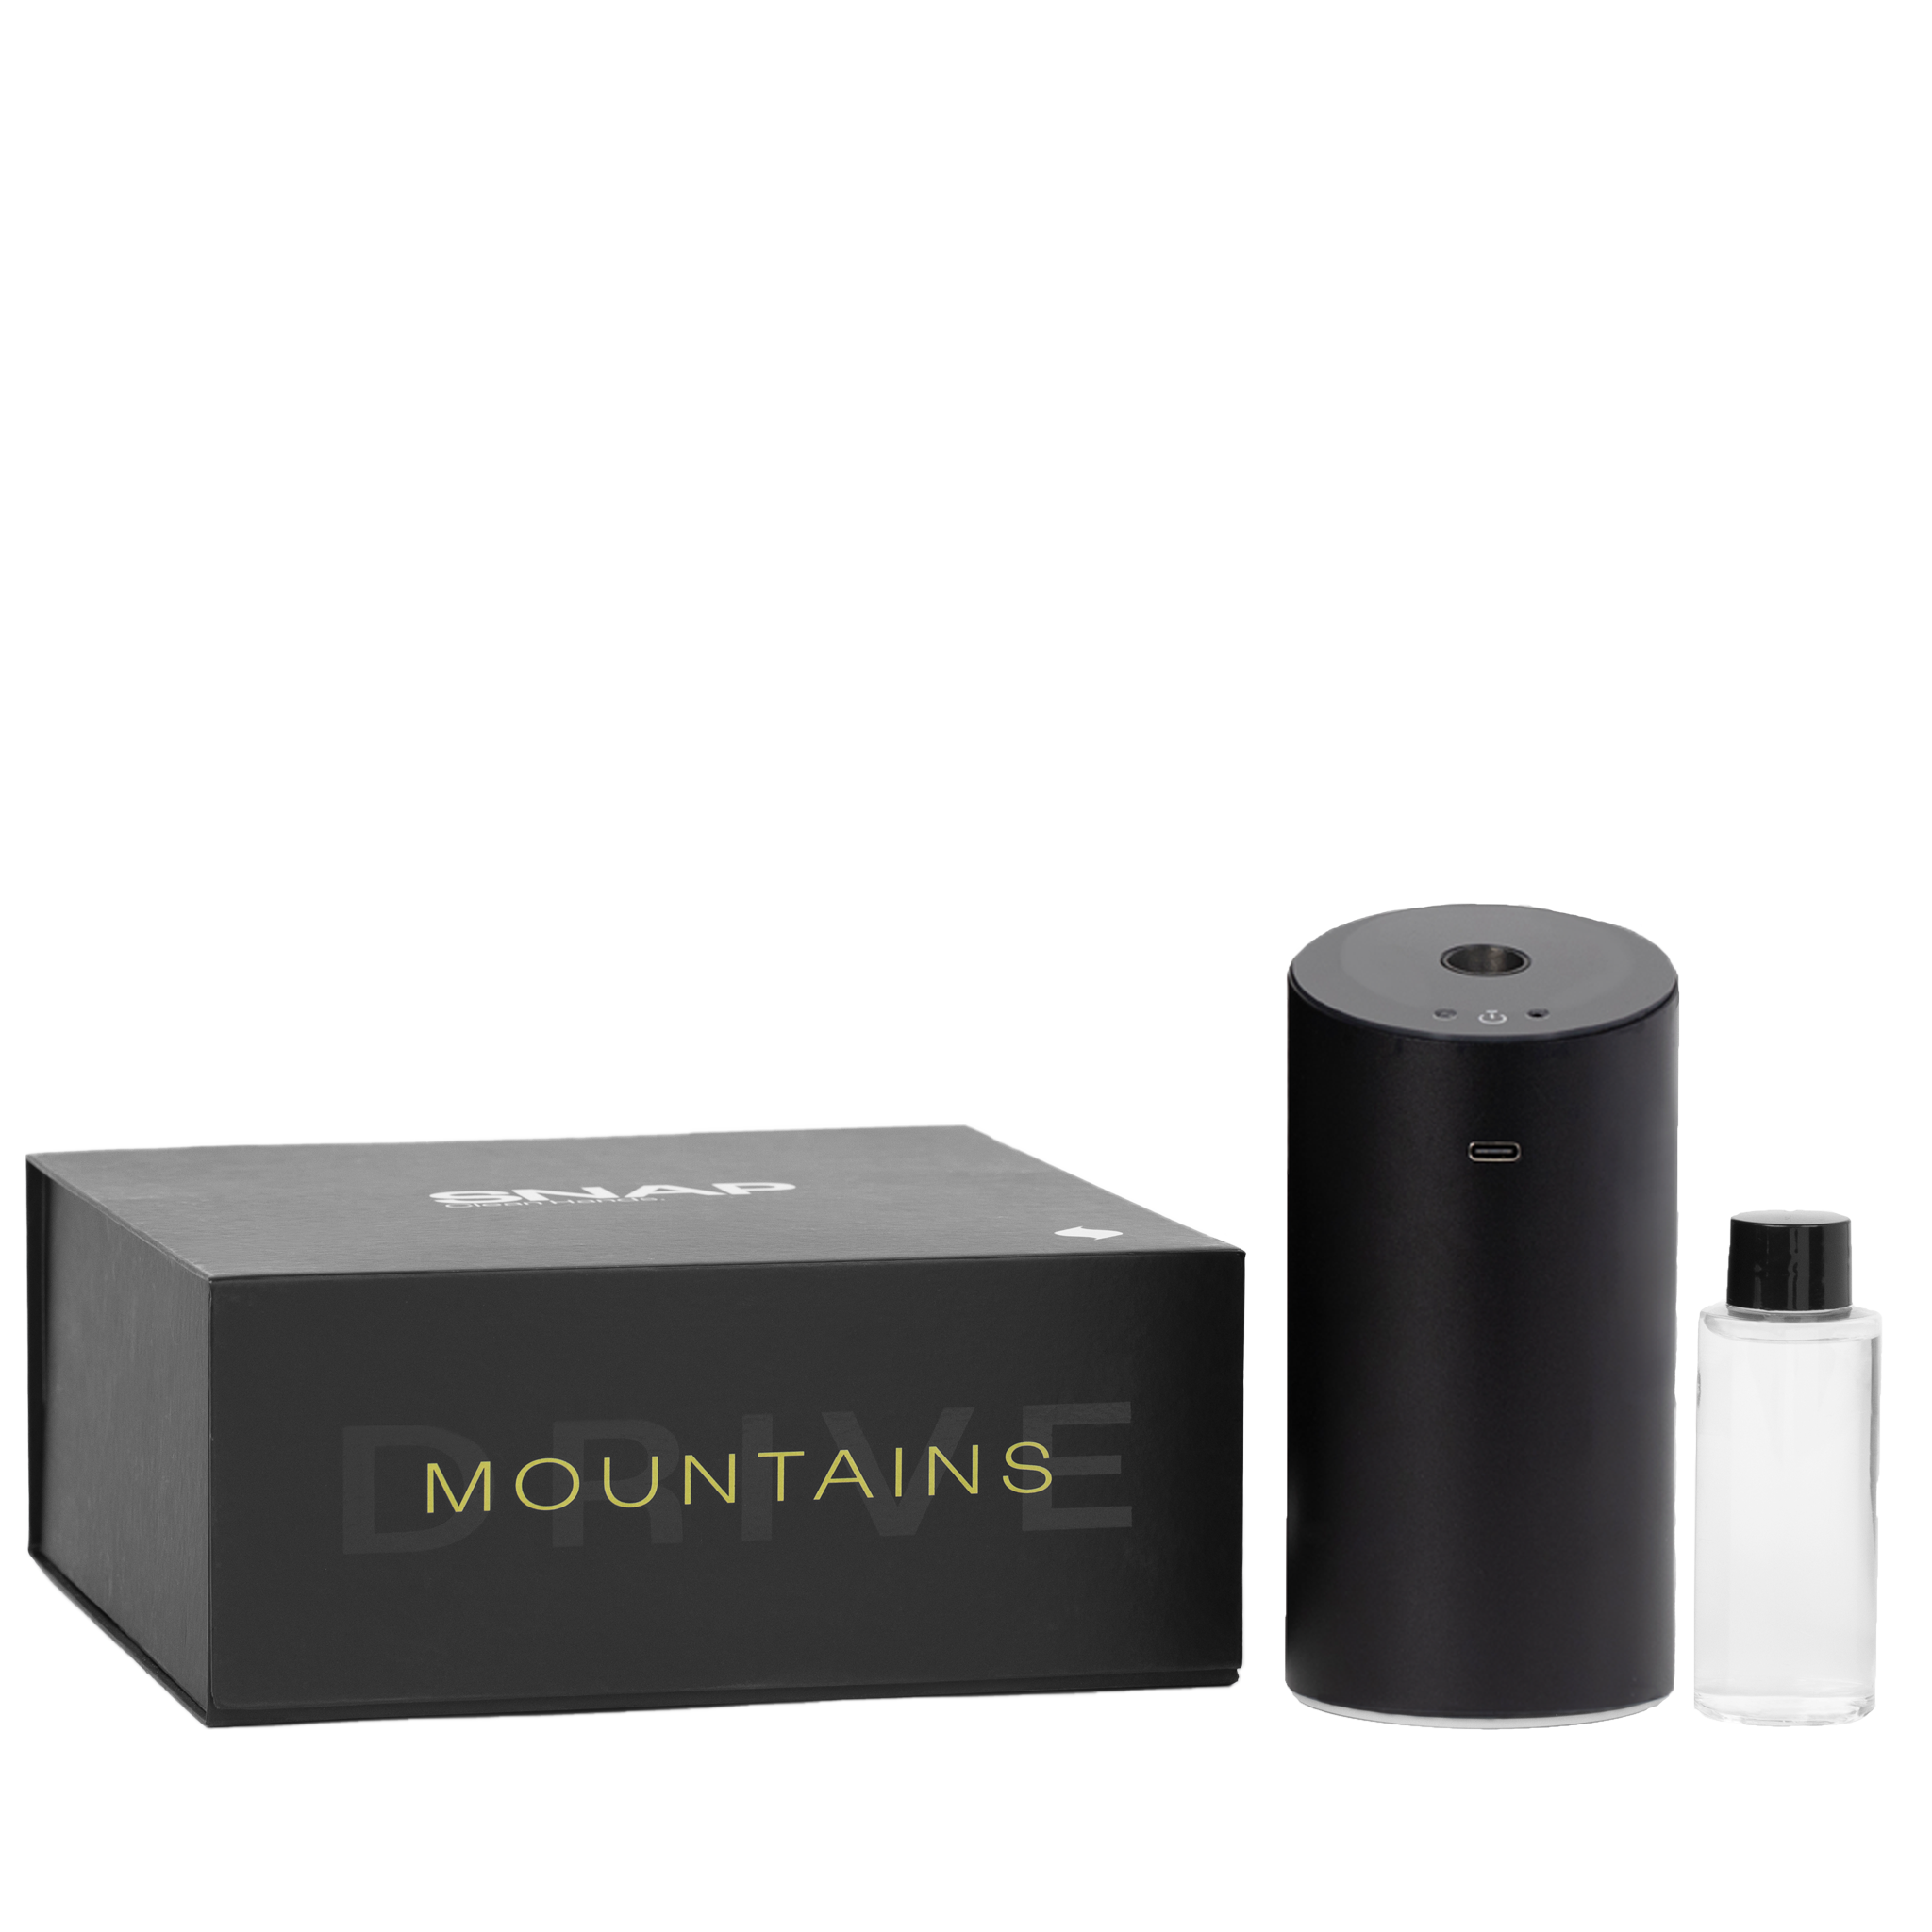 'Mountains' DRIVE Touchless Mist Sanitizer